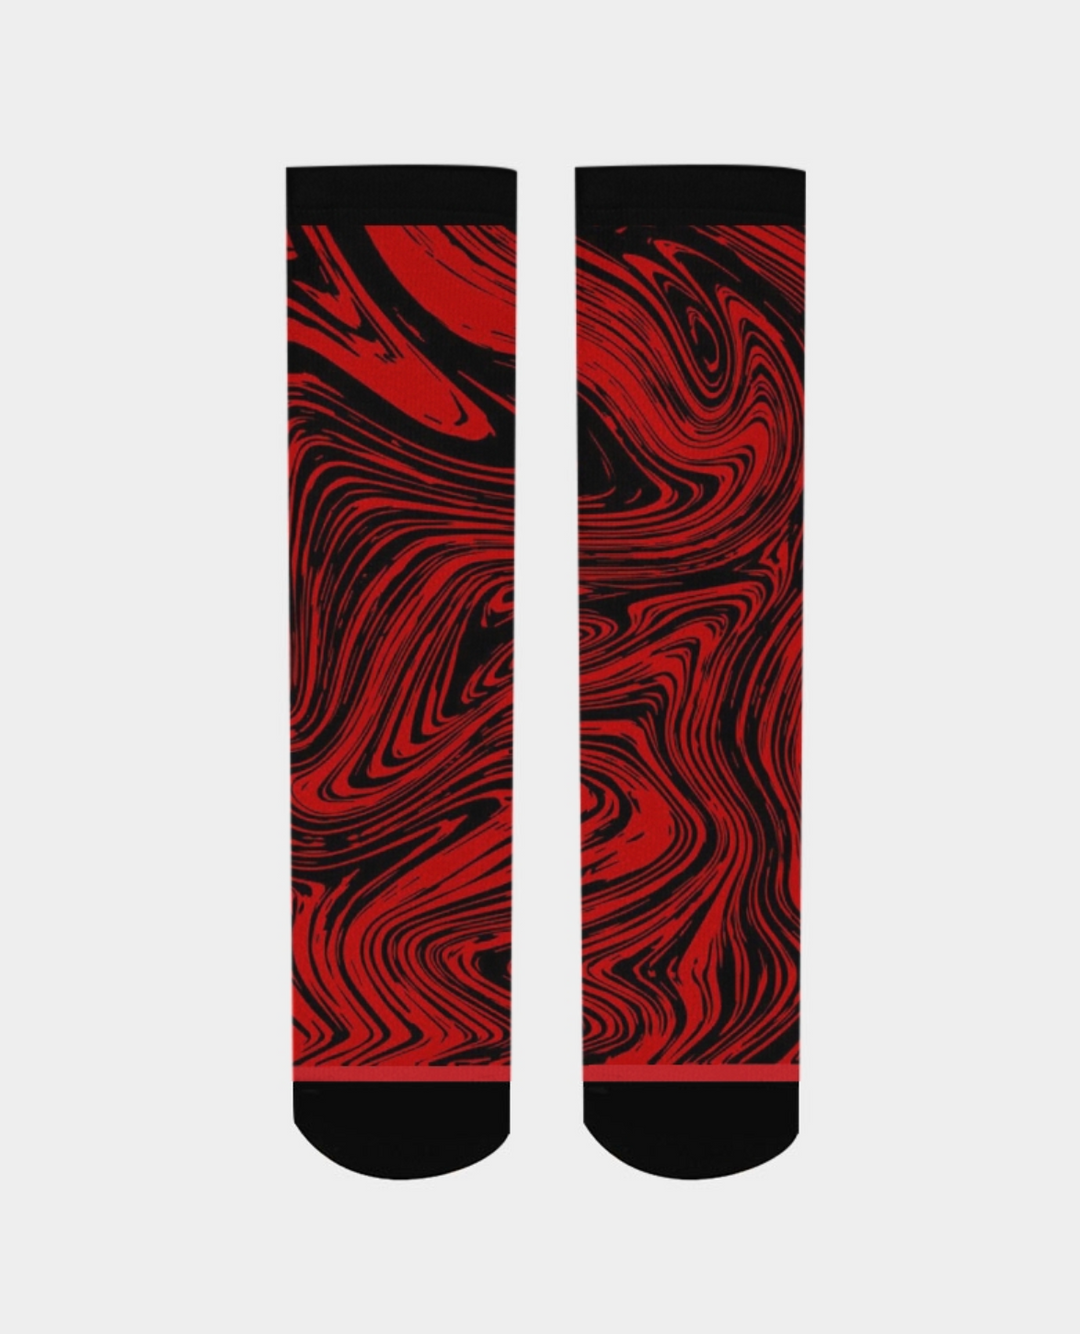 Swirl | Air jordan 9 Chile Red Inspired Socks